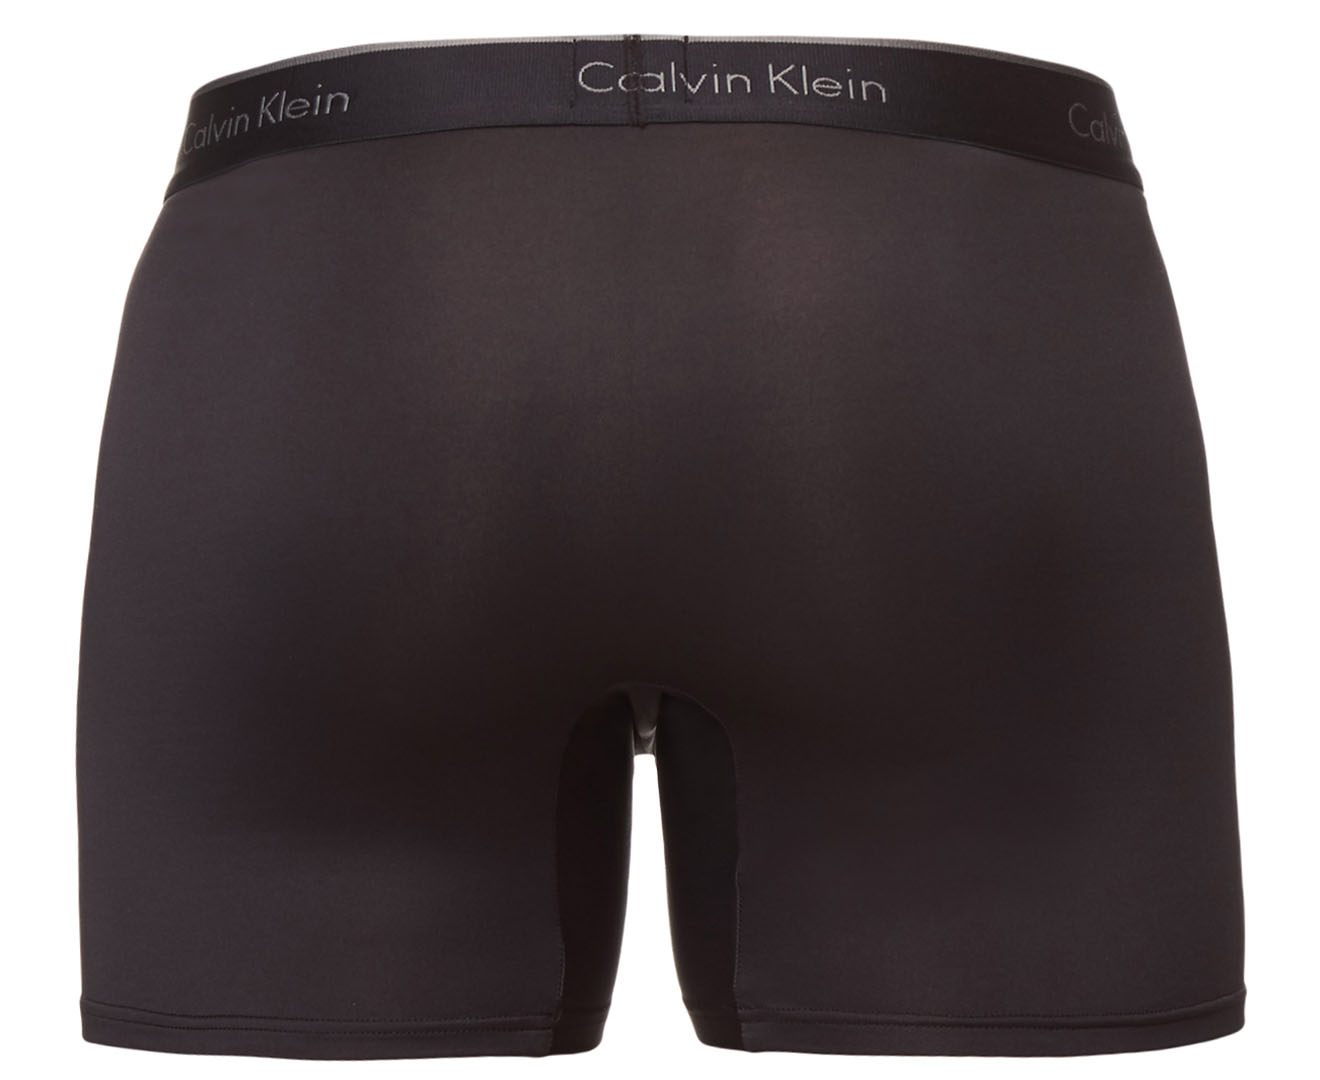 Fattal Beauty – Buy Calvin Klein Body Brief Black Boxer in Lebanon